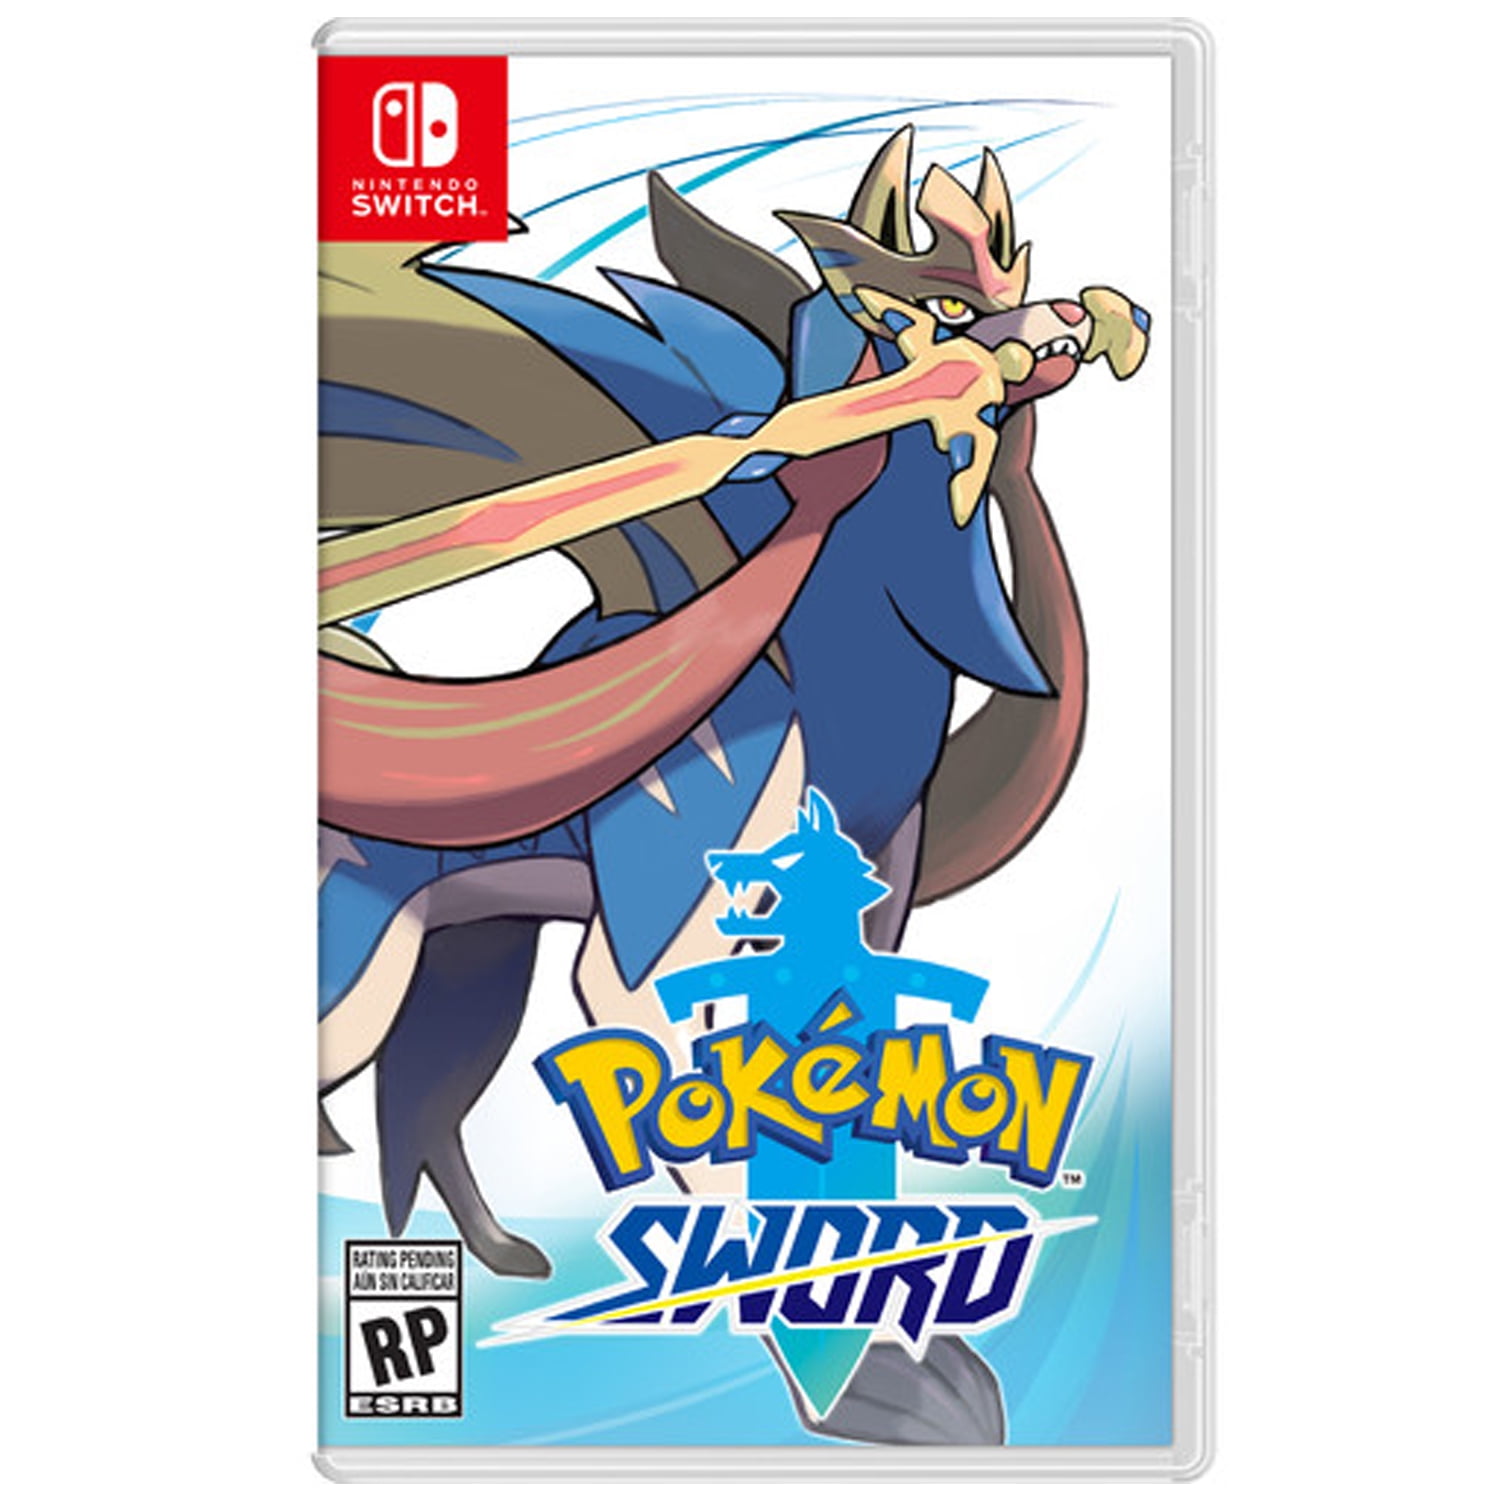 Pokémon Sword and Pokémon Shield! - SmashWiki, the Super Smash